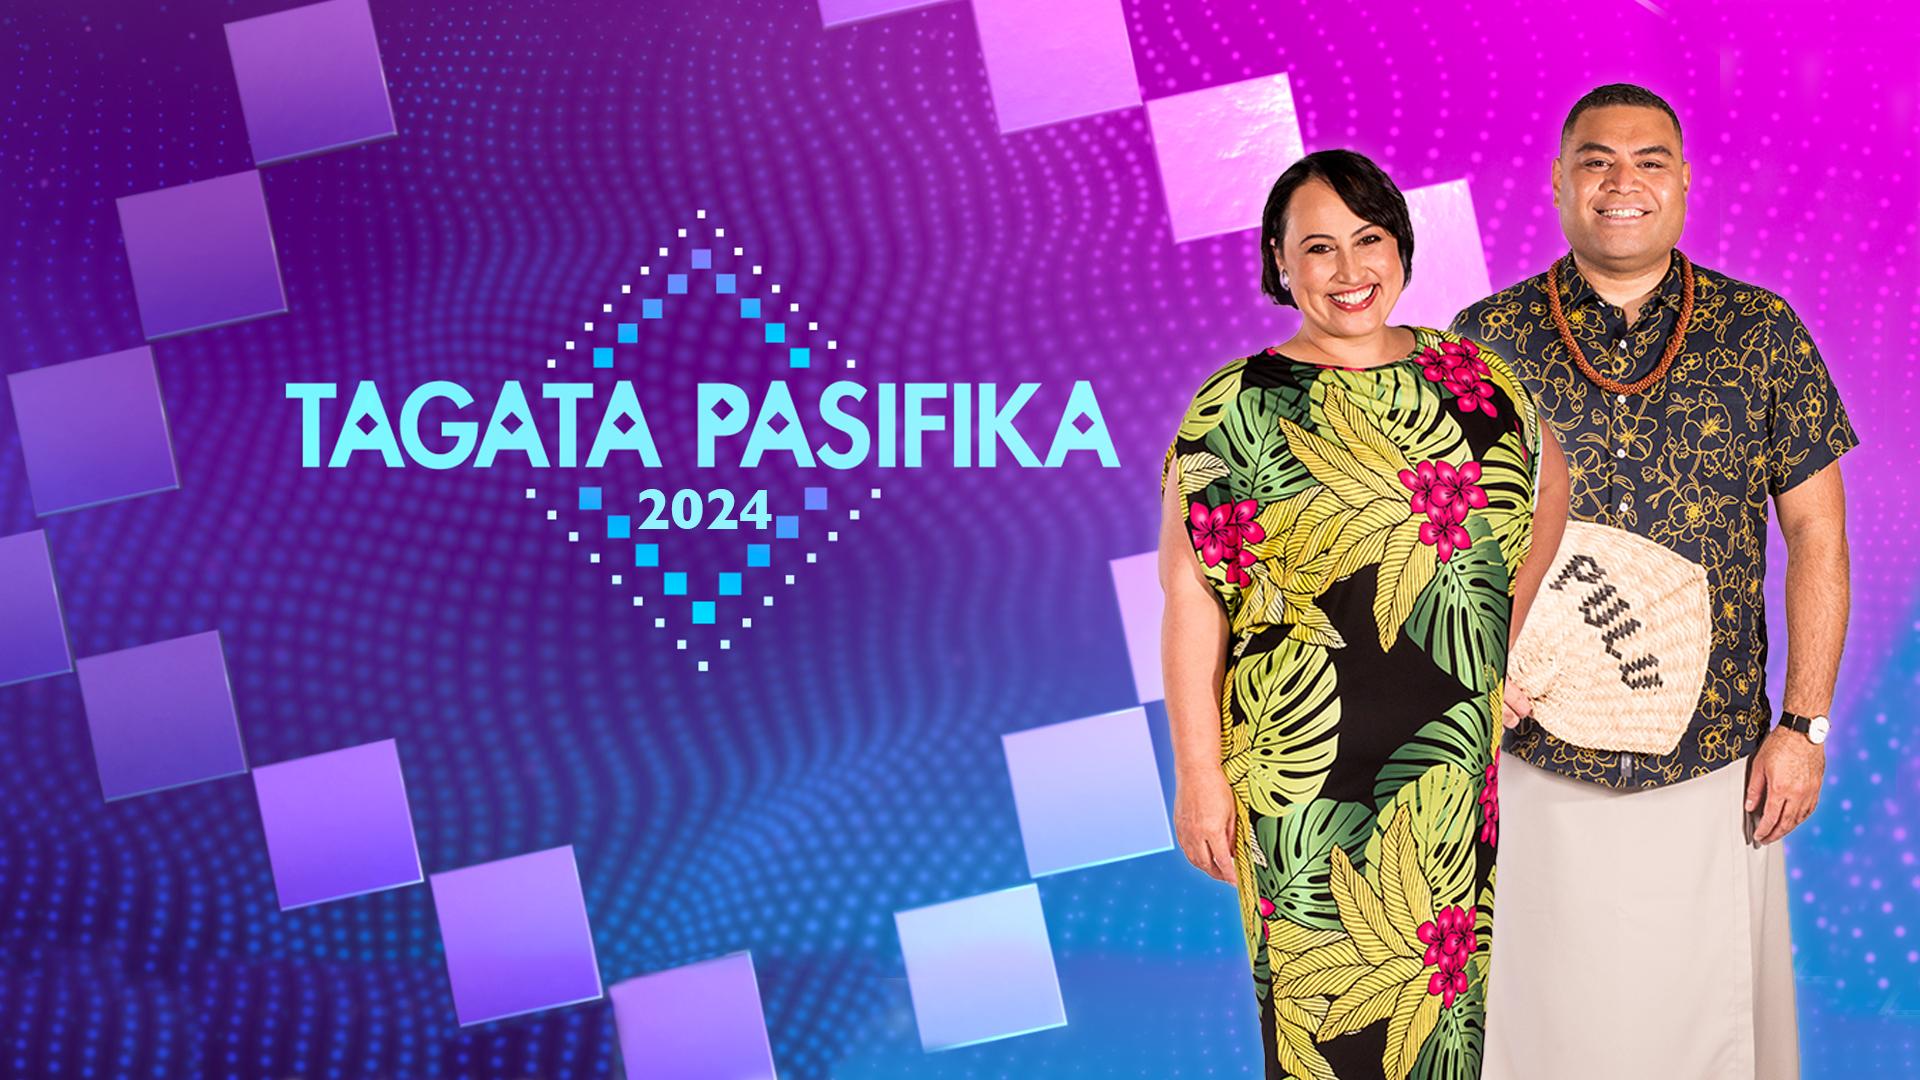 Tagata Pasifika Special | Festival of Pacific Arts and Culture 2024